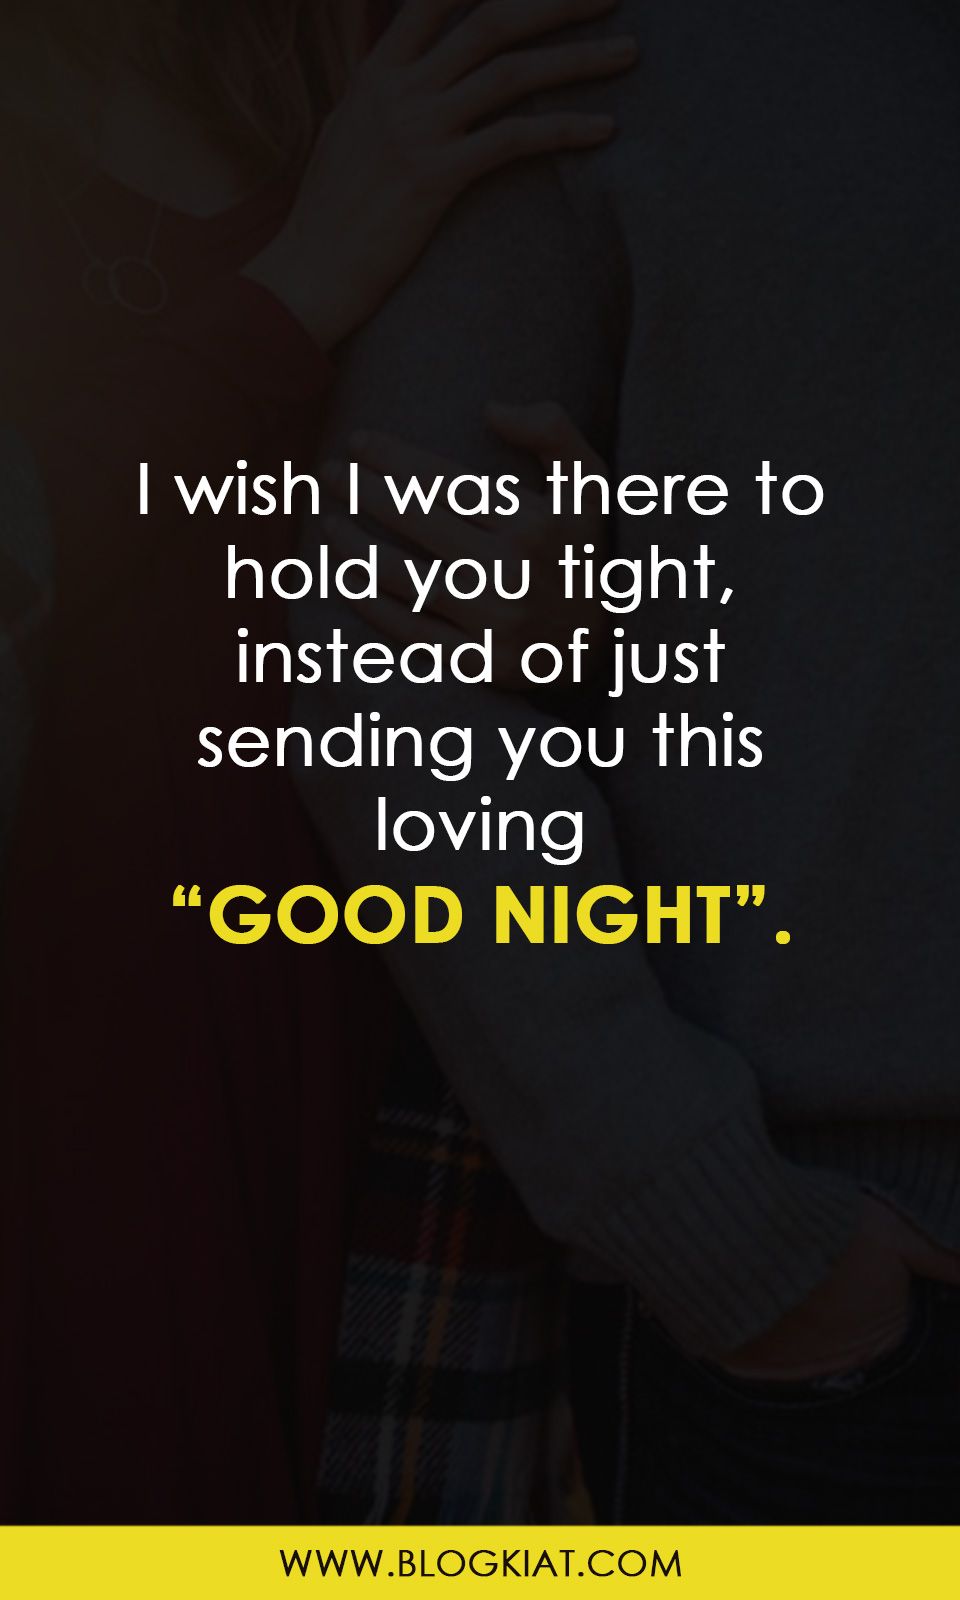 Inspirational Good Night Quotes | Good Night Love Quotes | Good Night Quotes For Her